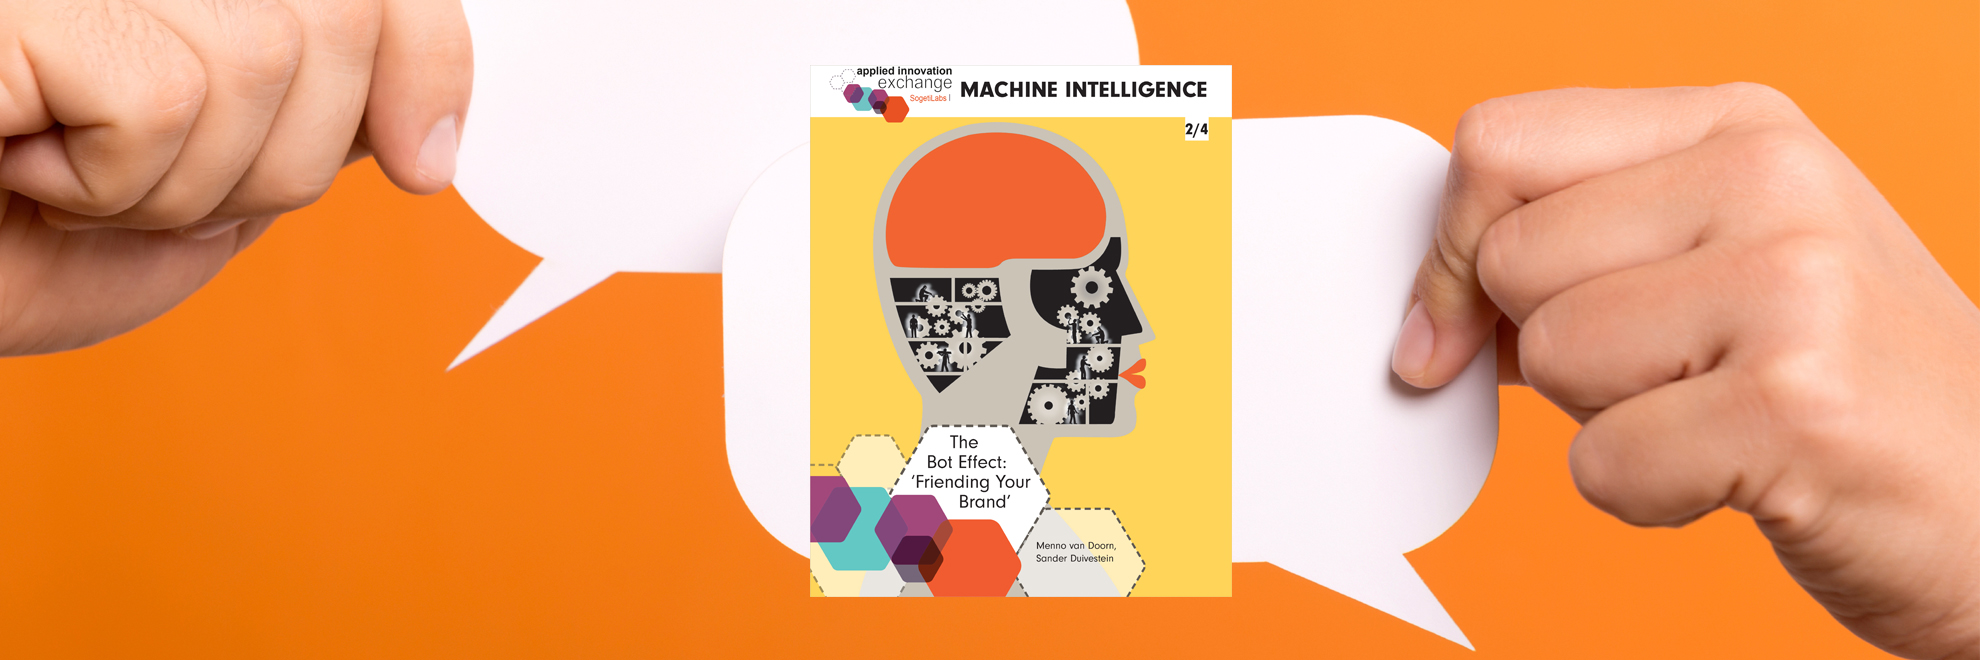 machine intelligence 2